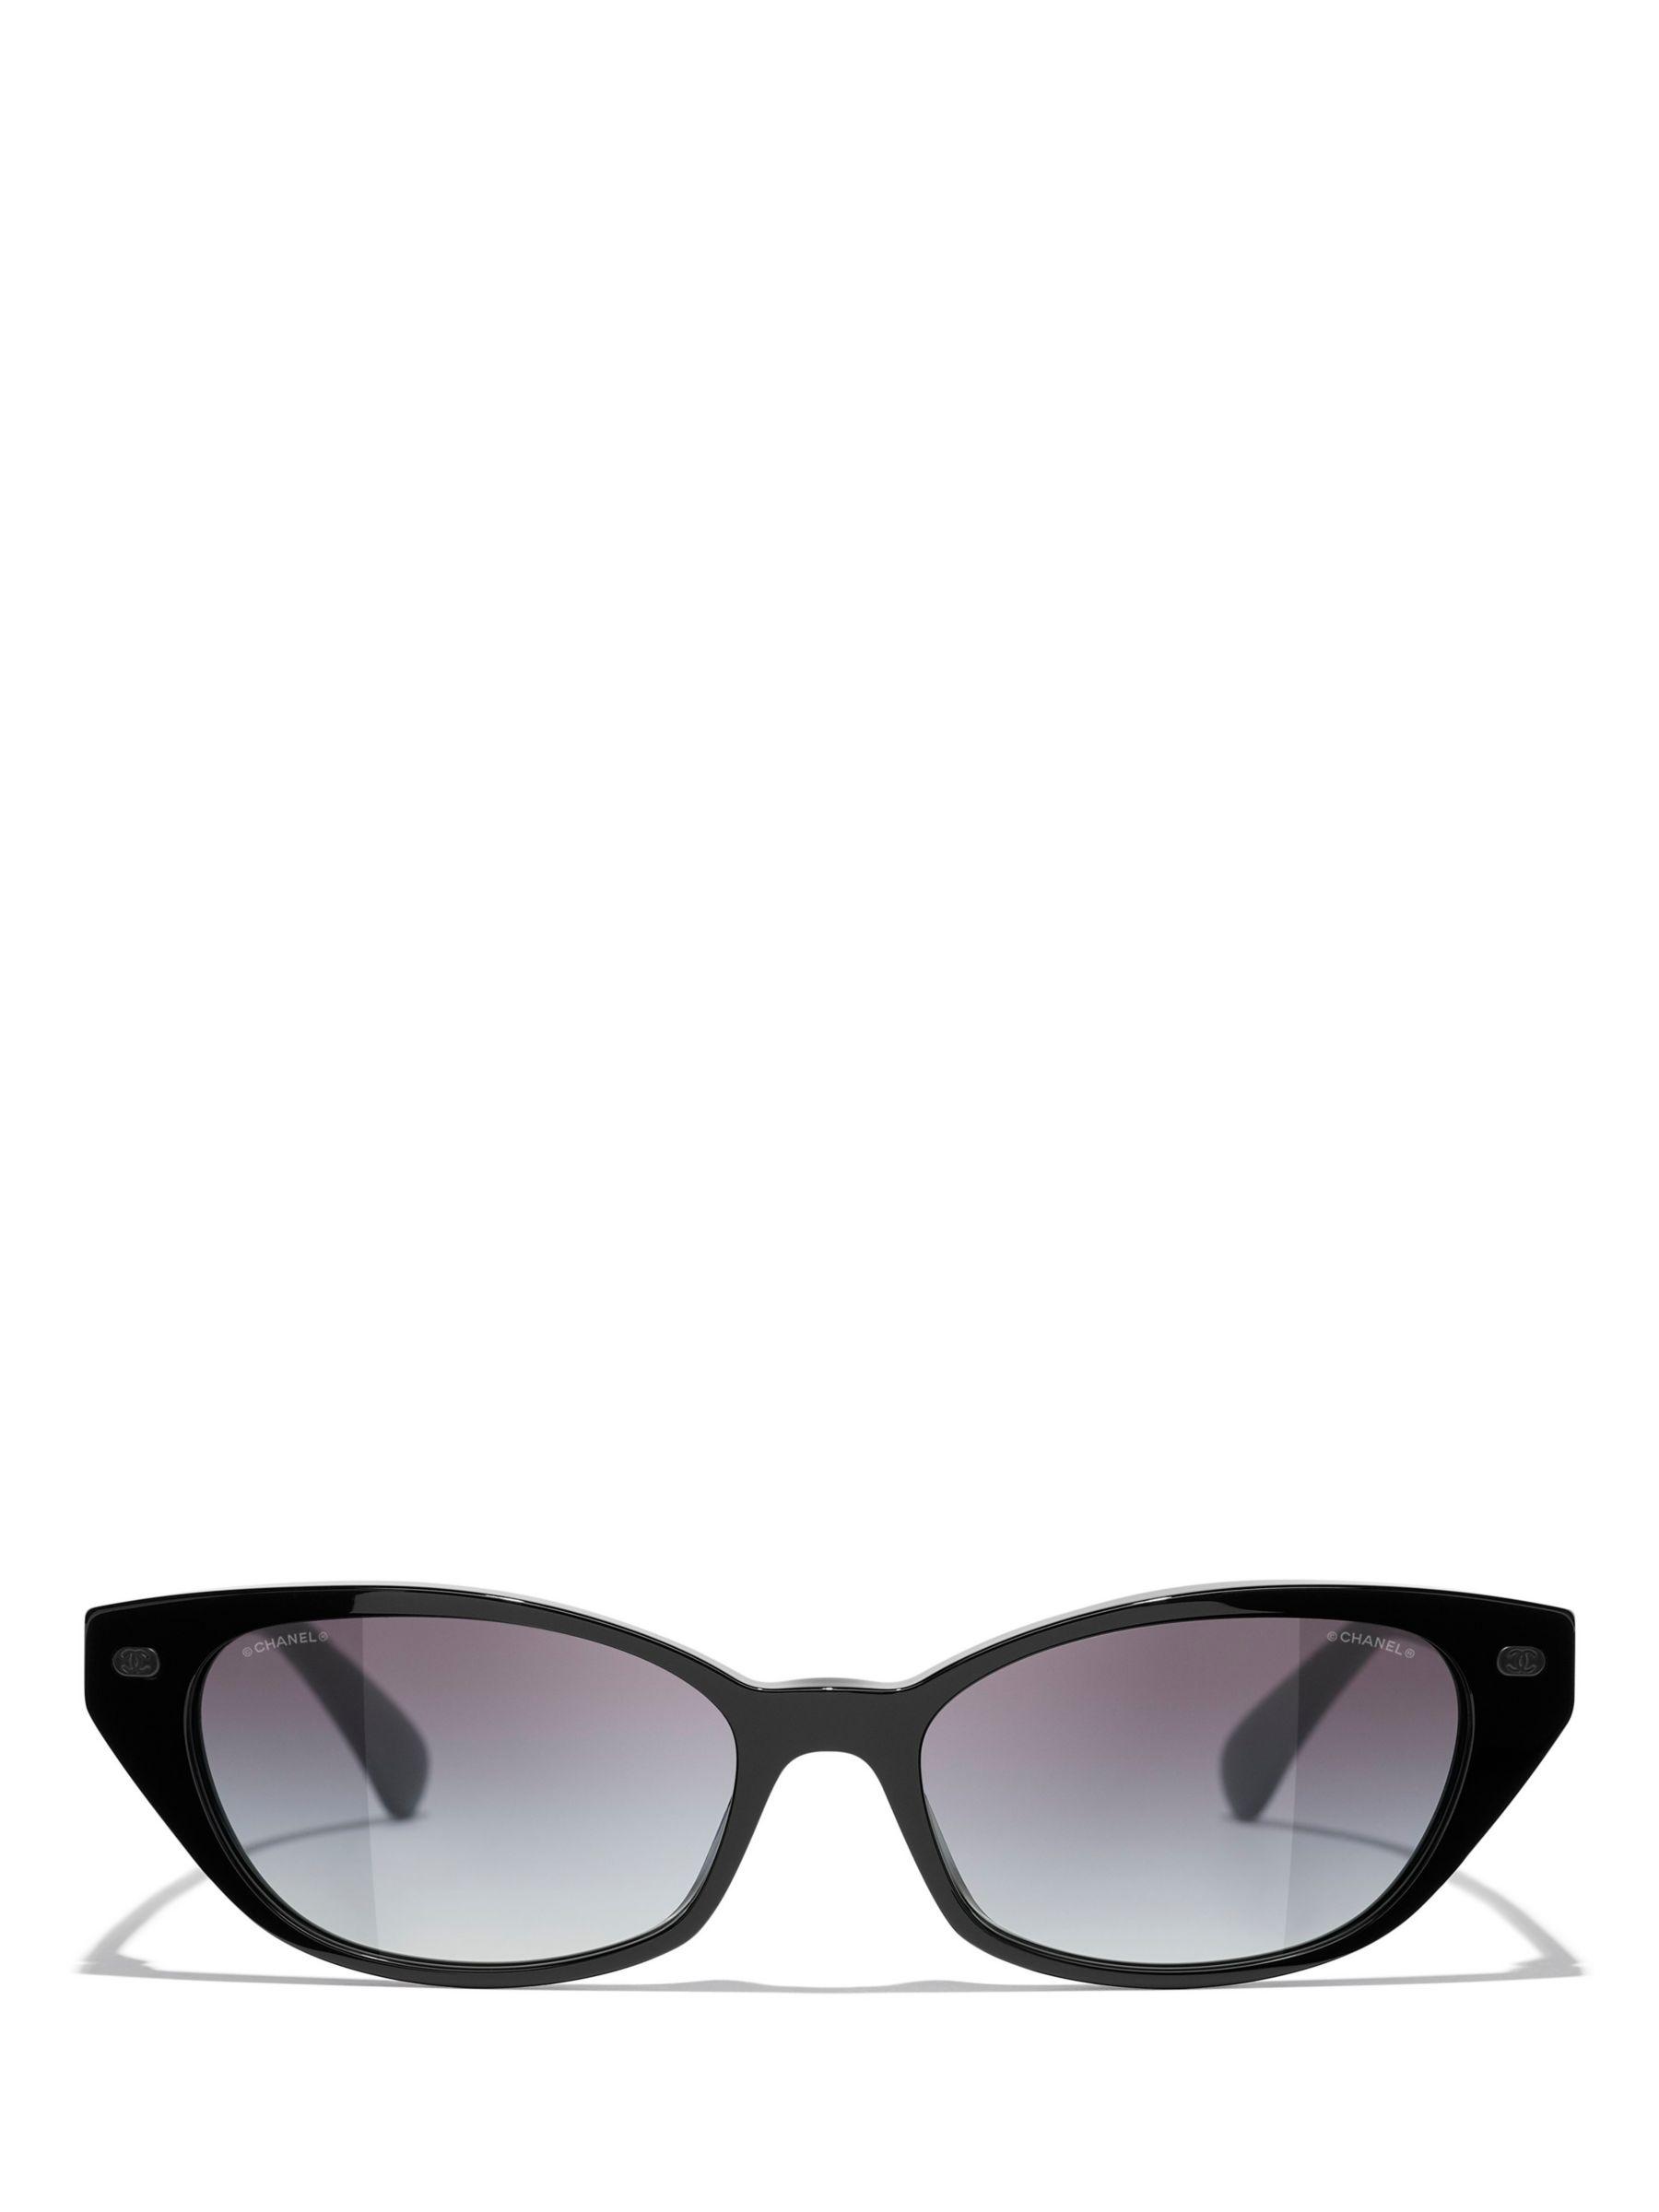 Chanel Cat's Eye Sunglasses Ch5438q Black/grey Gradient in Grey